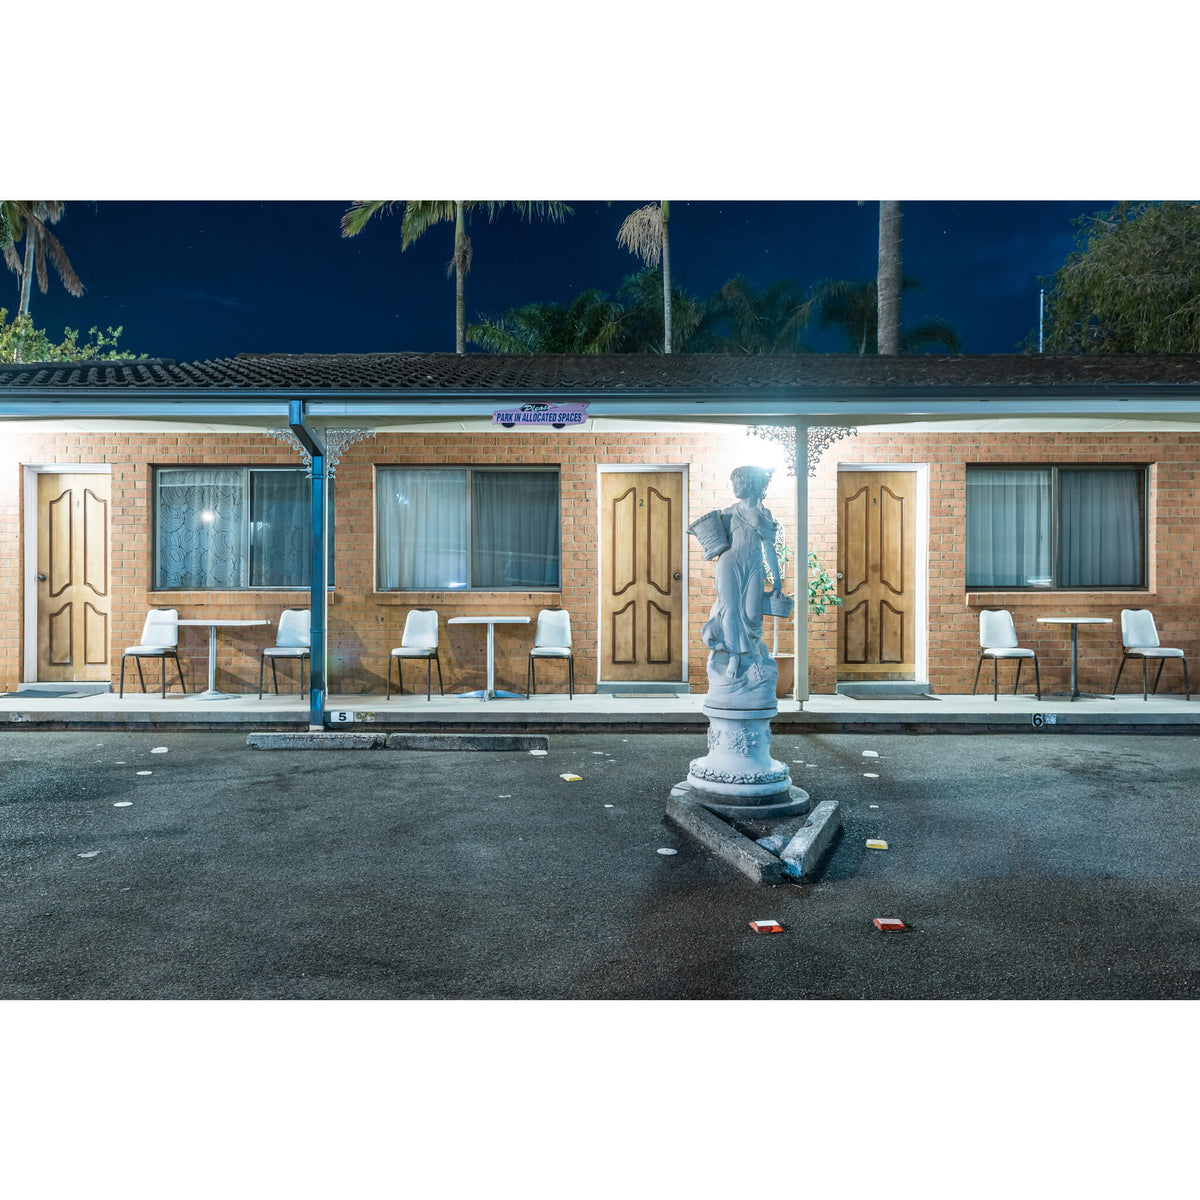 Sapphire Palms Motel, The Entrance | Hotel Motel 101 Fine Art Print - Lost Collective Shop